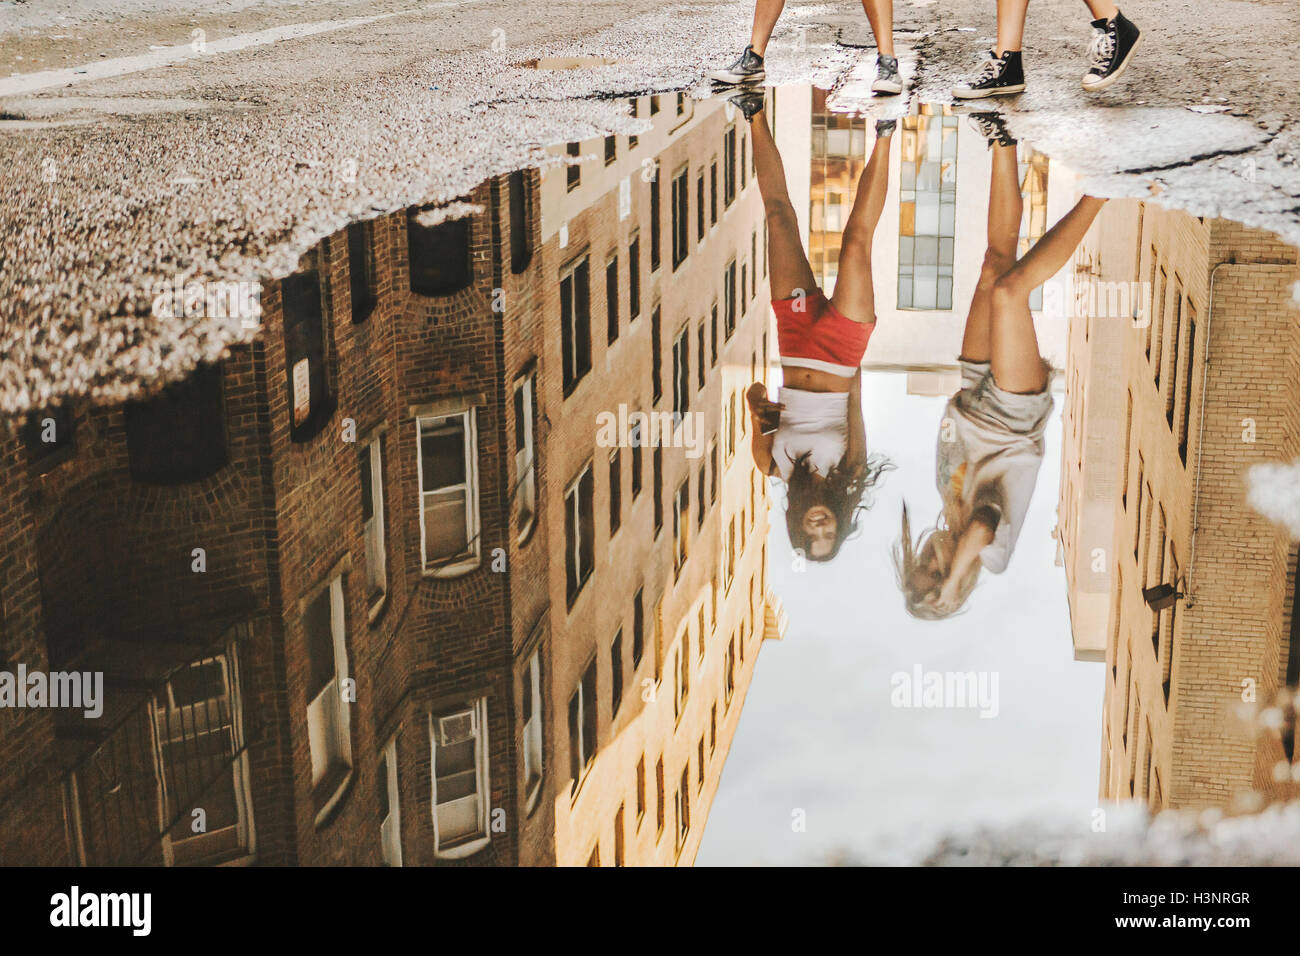 Women walking through puddle on road, Boston, MA, USA Stock Photo